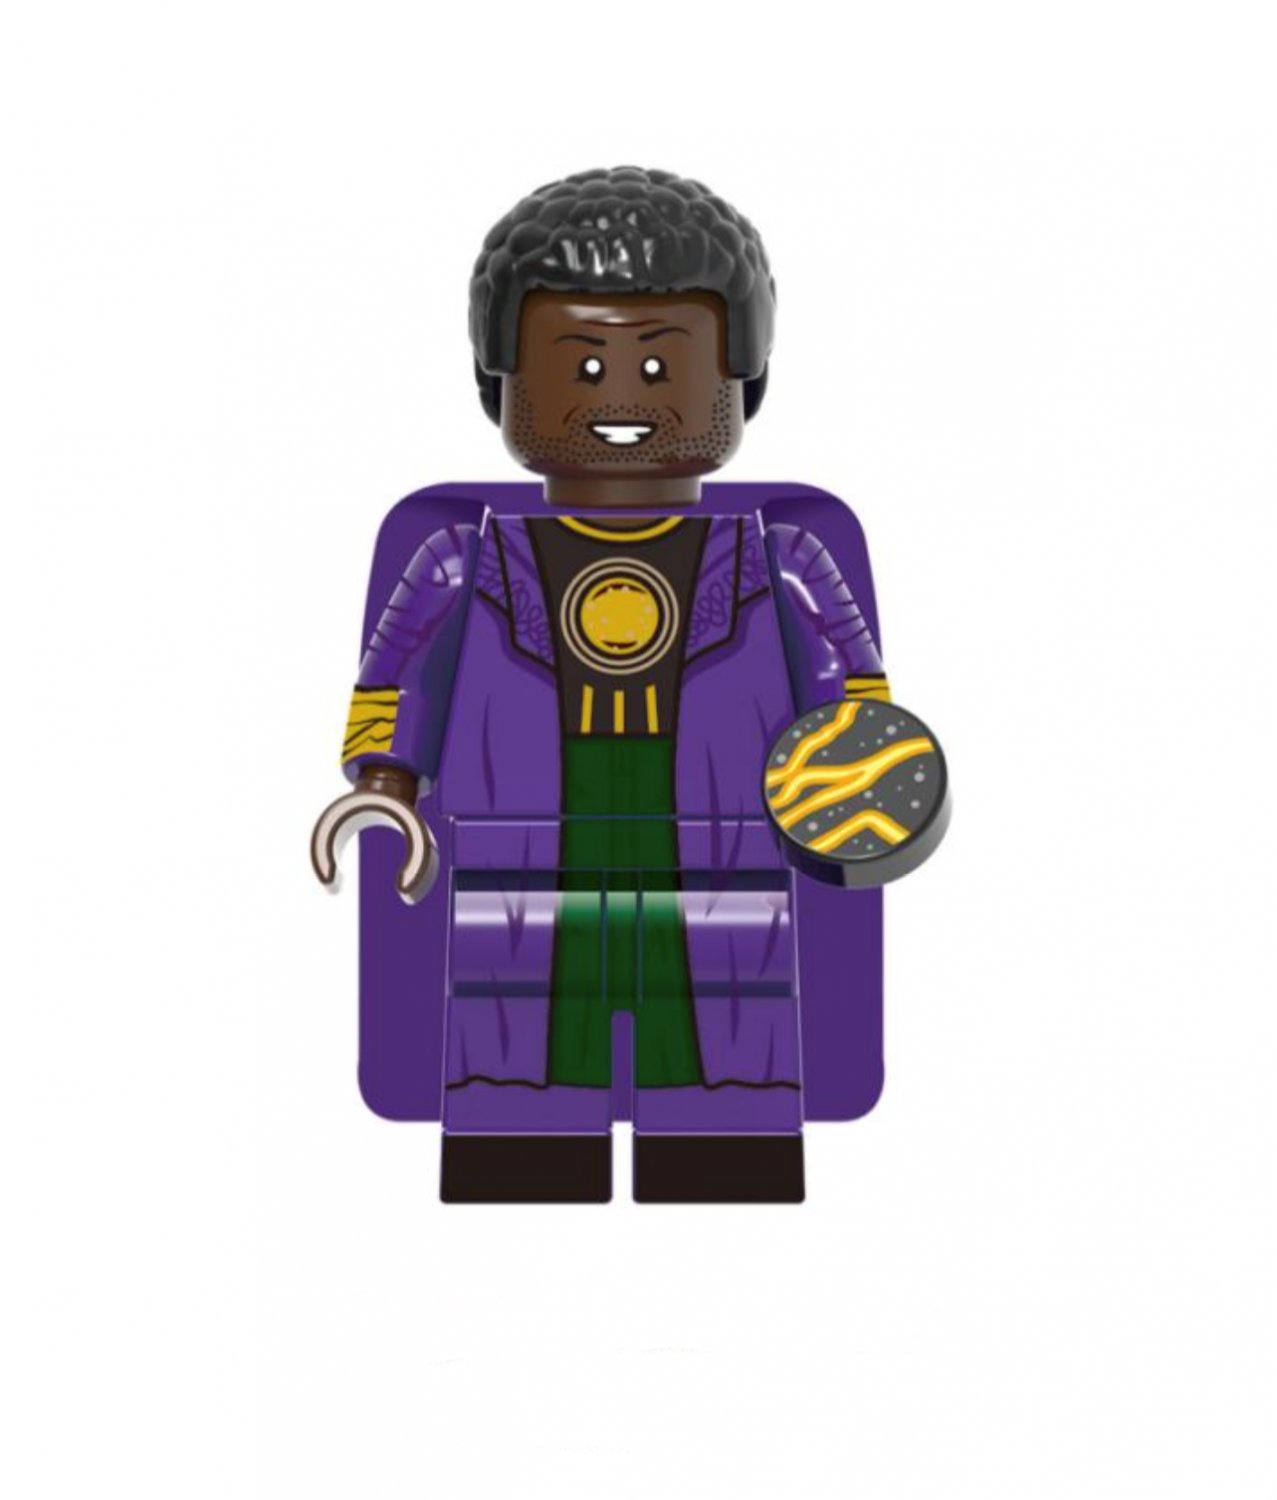 Kang the Conqueror Loki Series Lego Minifigure Toy